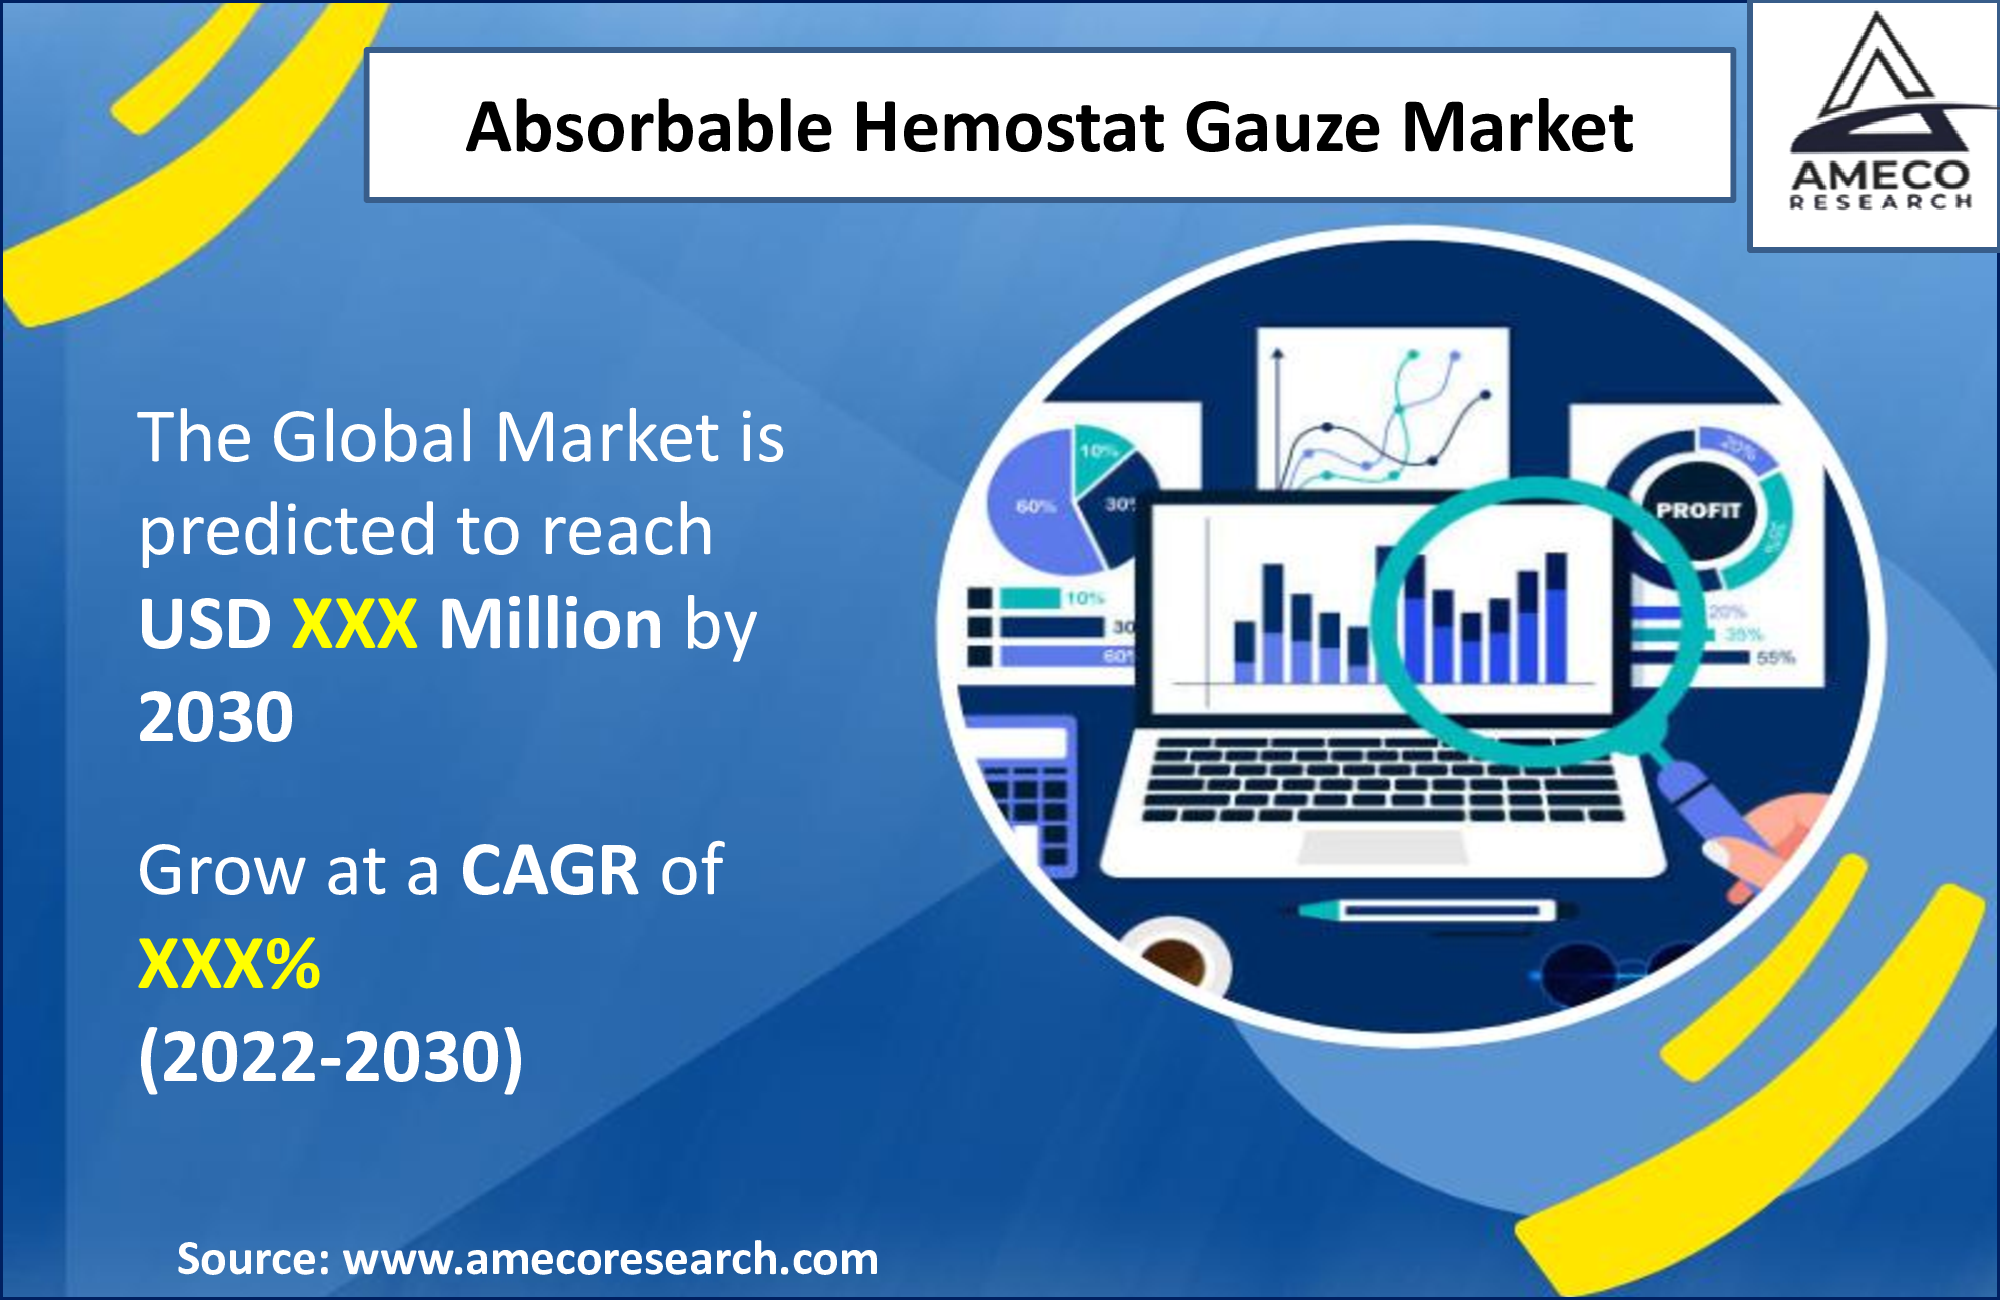 Absorbable Hemostat Gauze Market